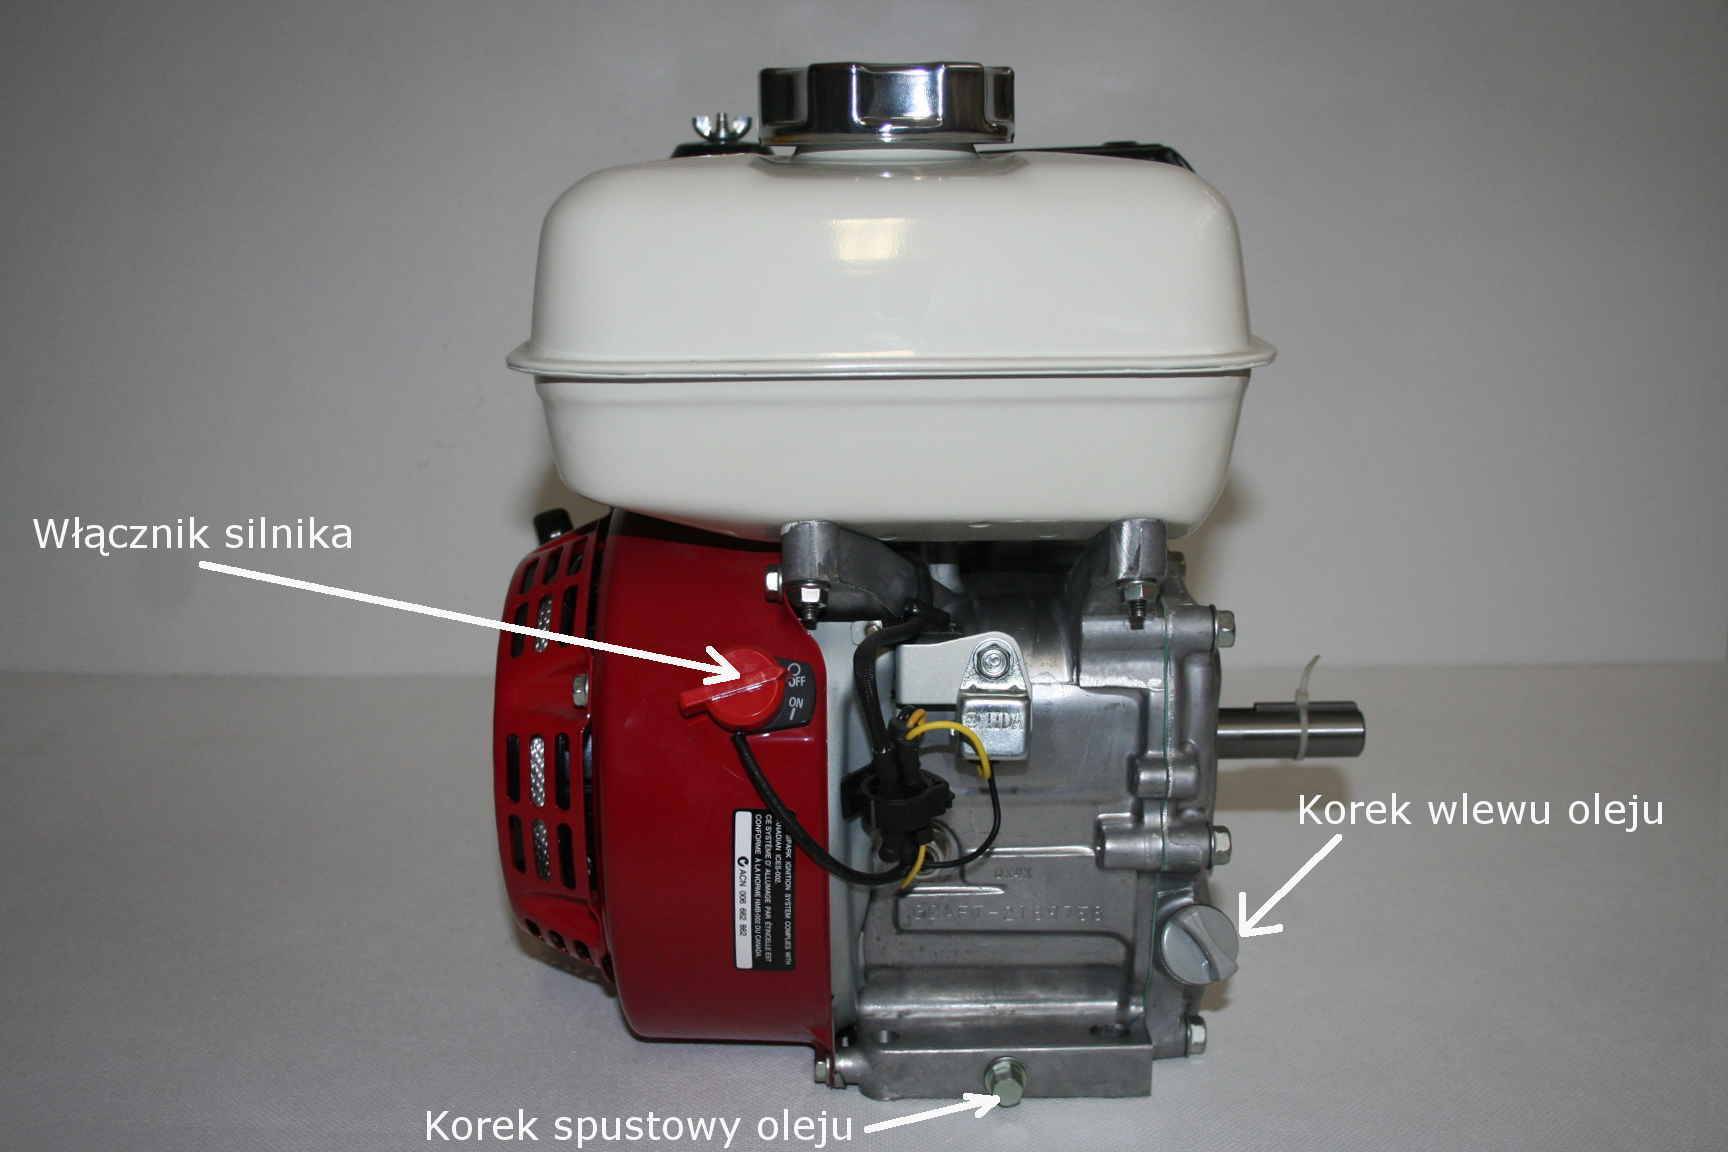 Мотоблок хонда (honda): двигатель, gx-200, f810, gx-160